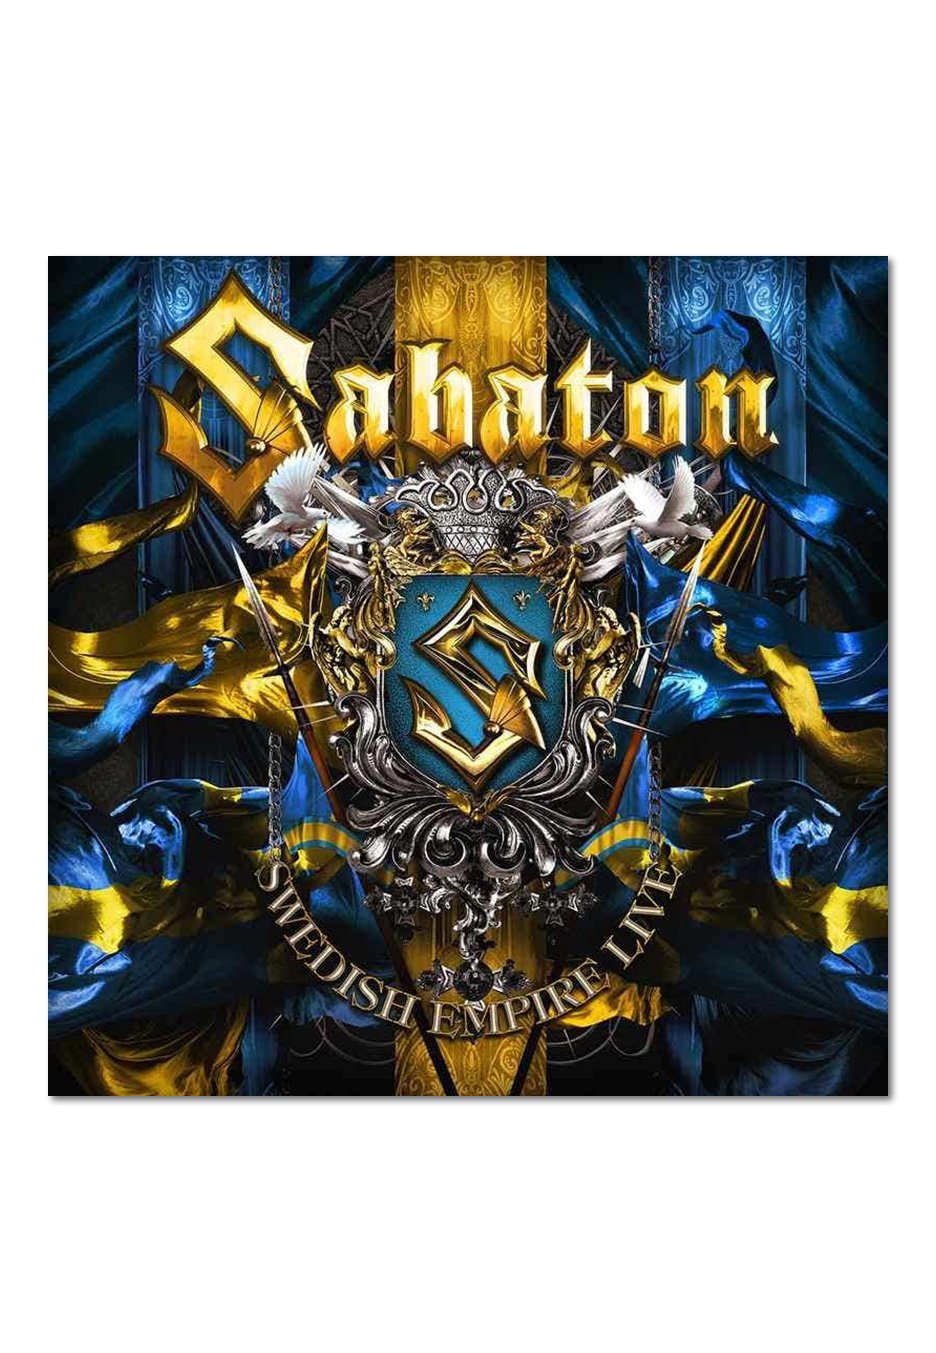 Sabaton - Swedish Empire Live - CD